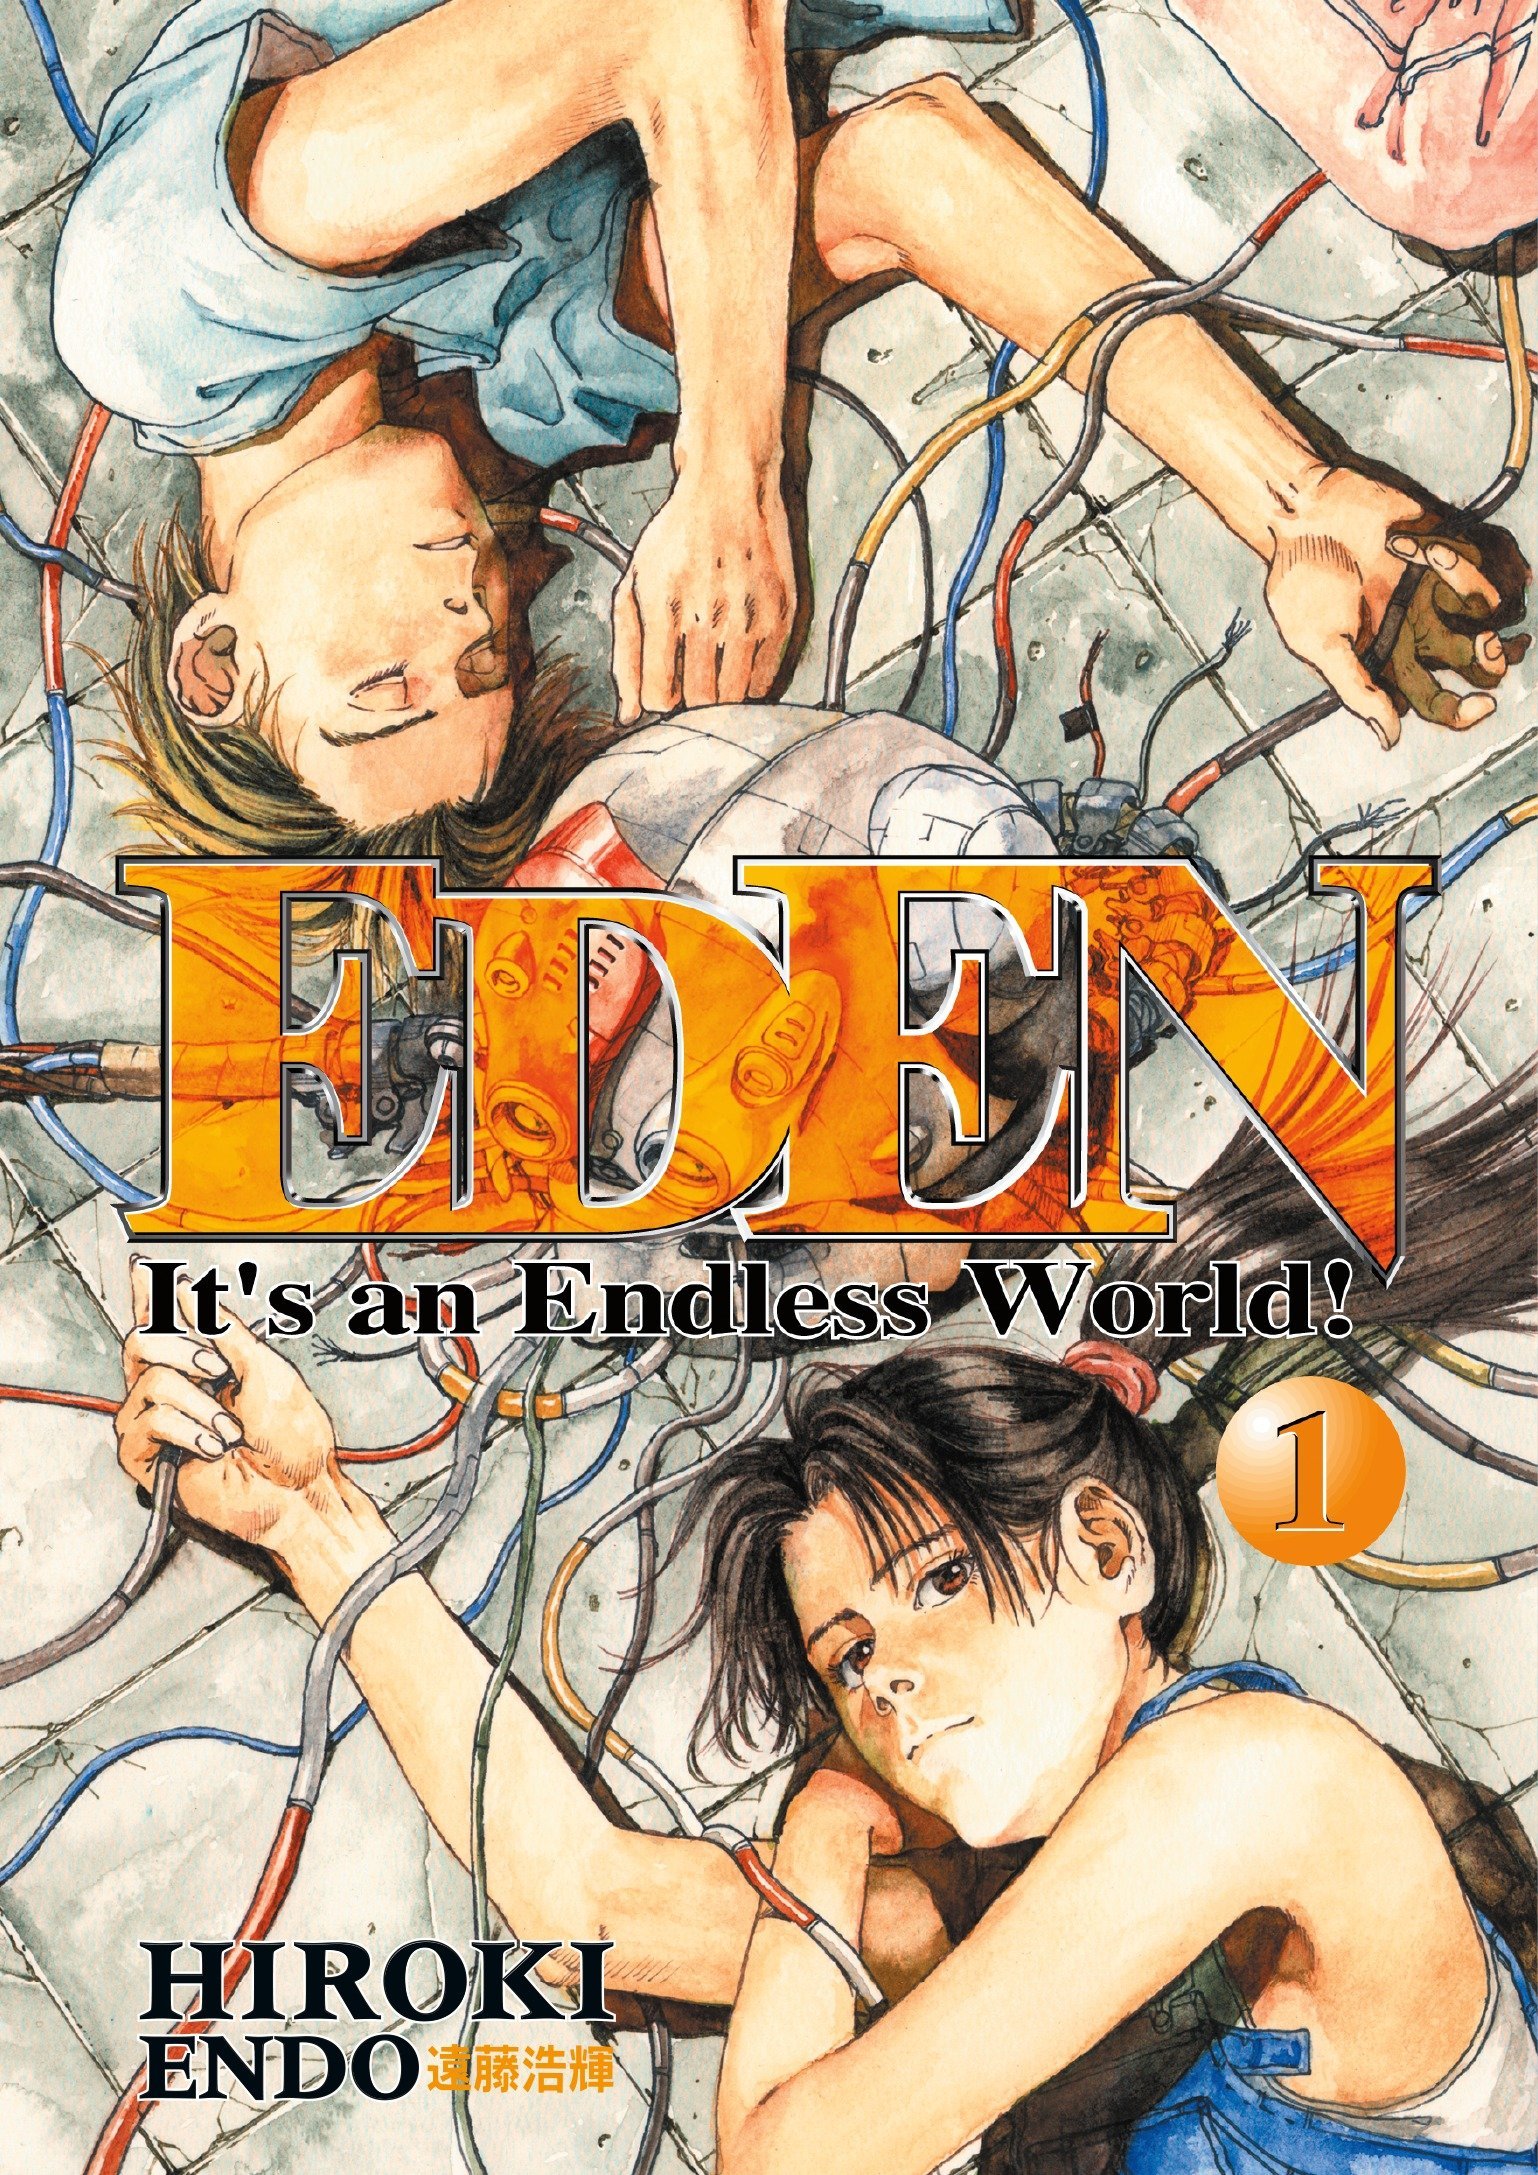 Recensione fumetto: “Eden: it’s an endless world!” di Hiroki Endo.